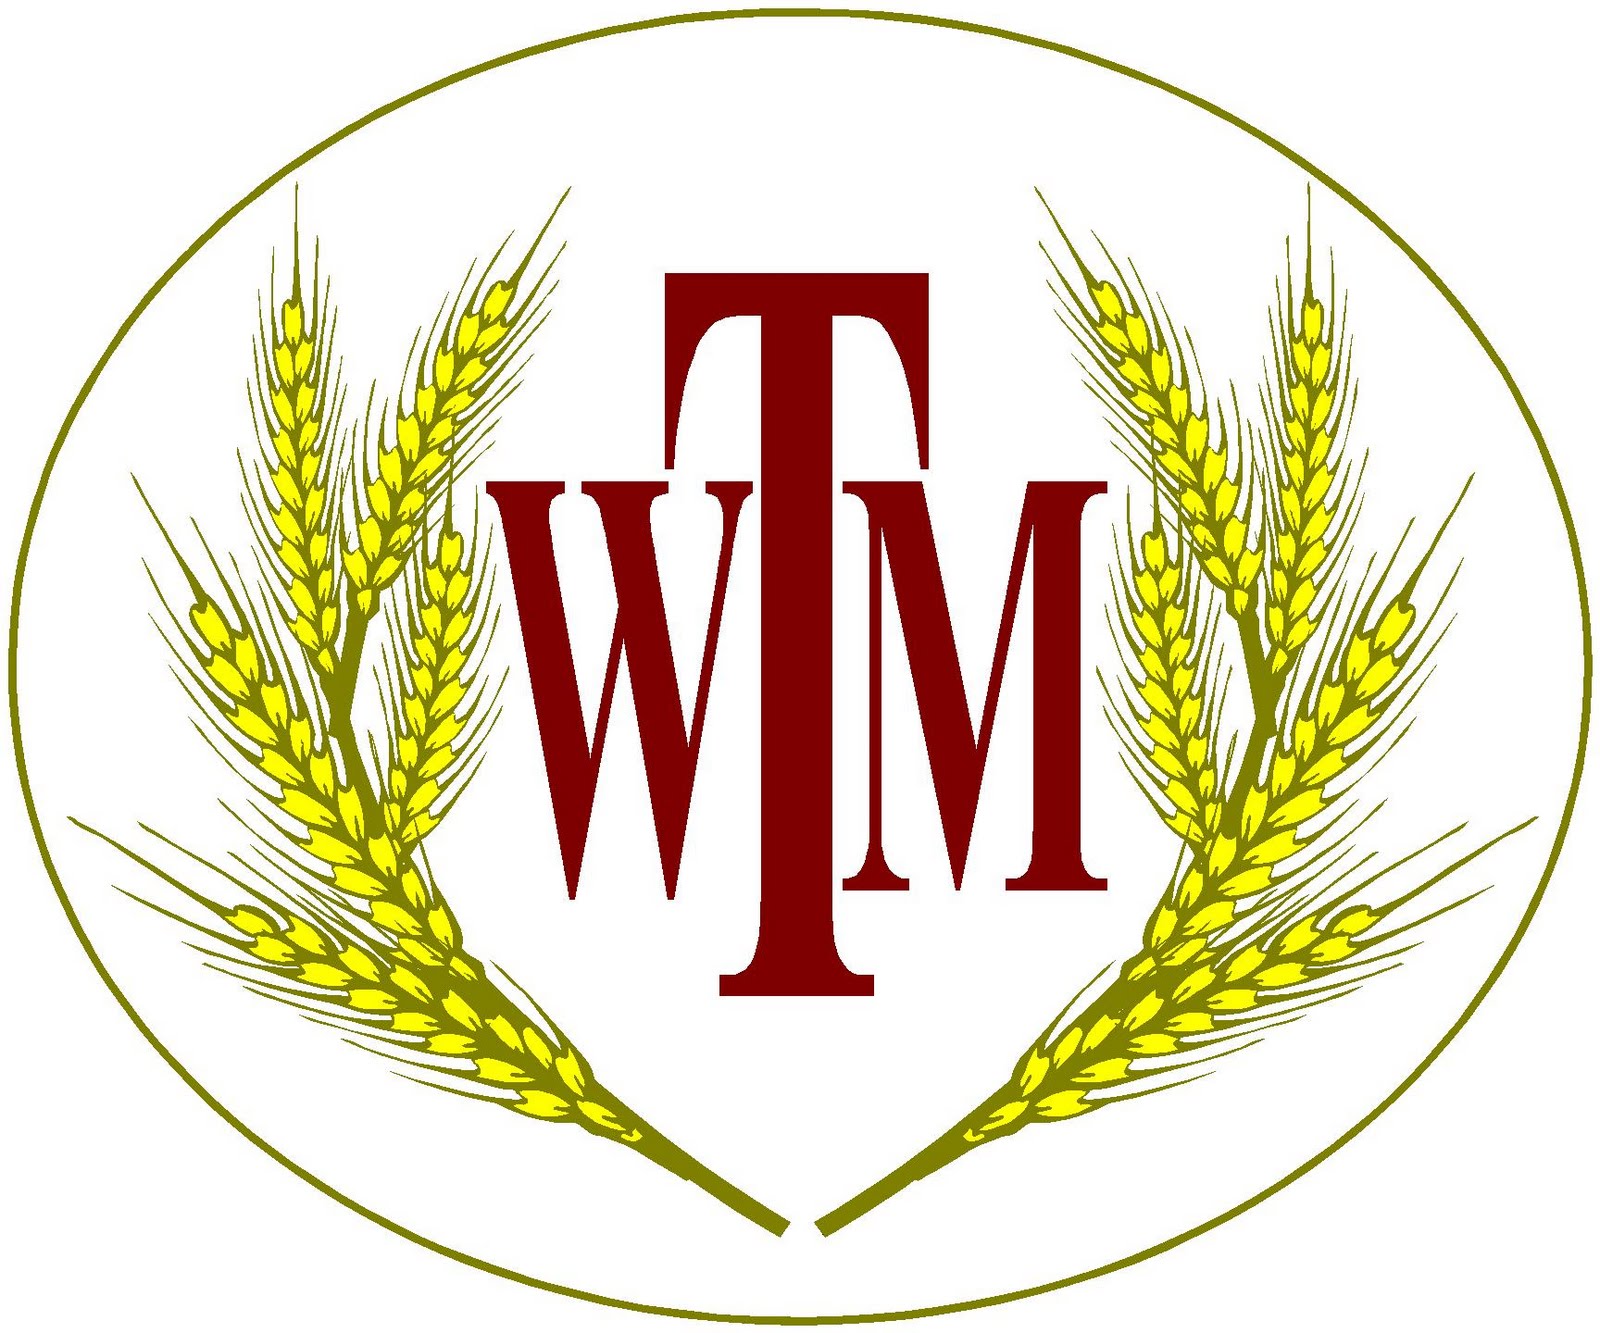 McIntosh Creative Design: Wheat And Tares Ministries Logo